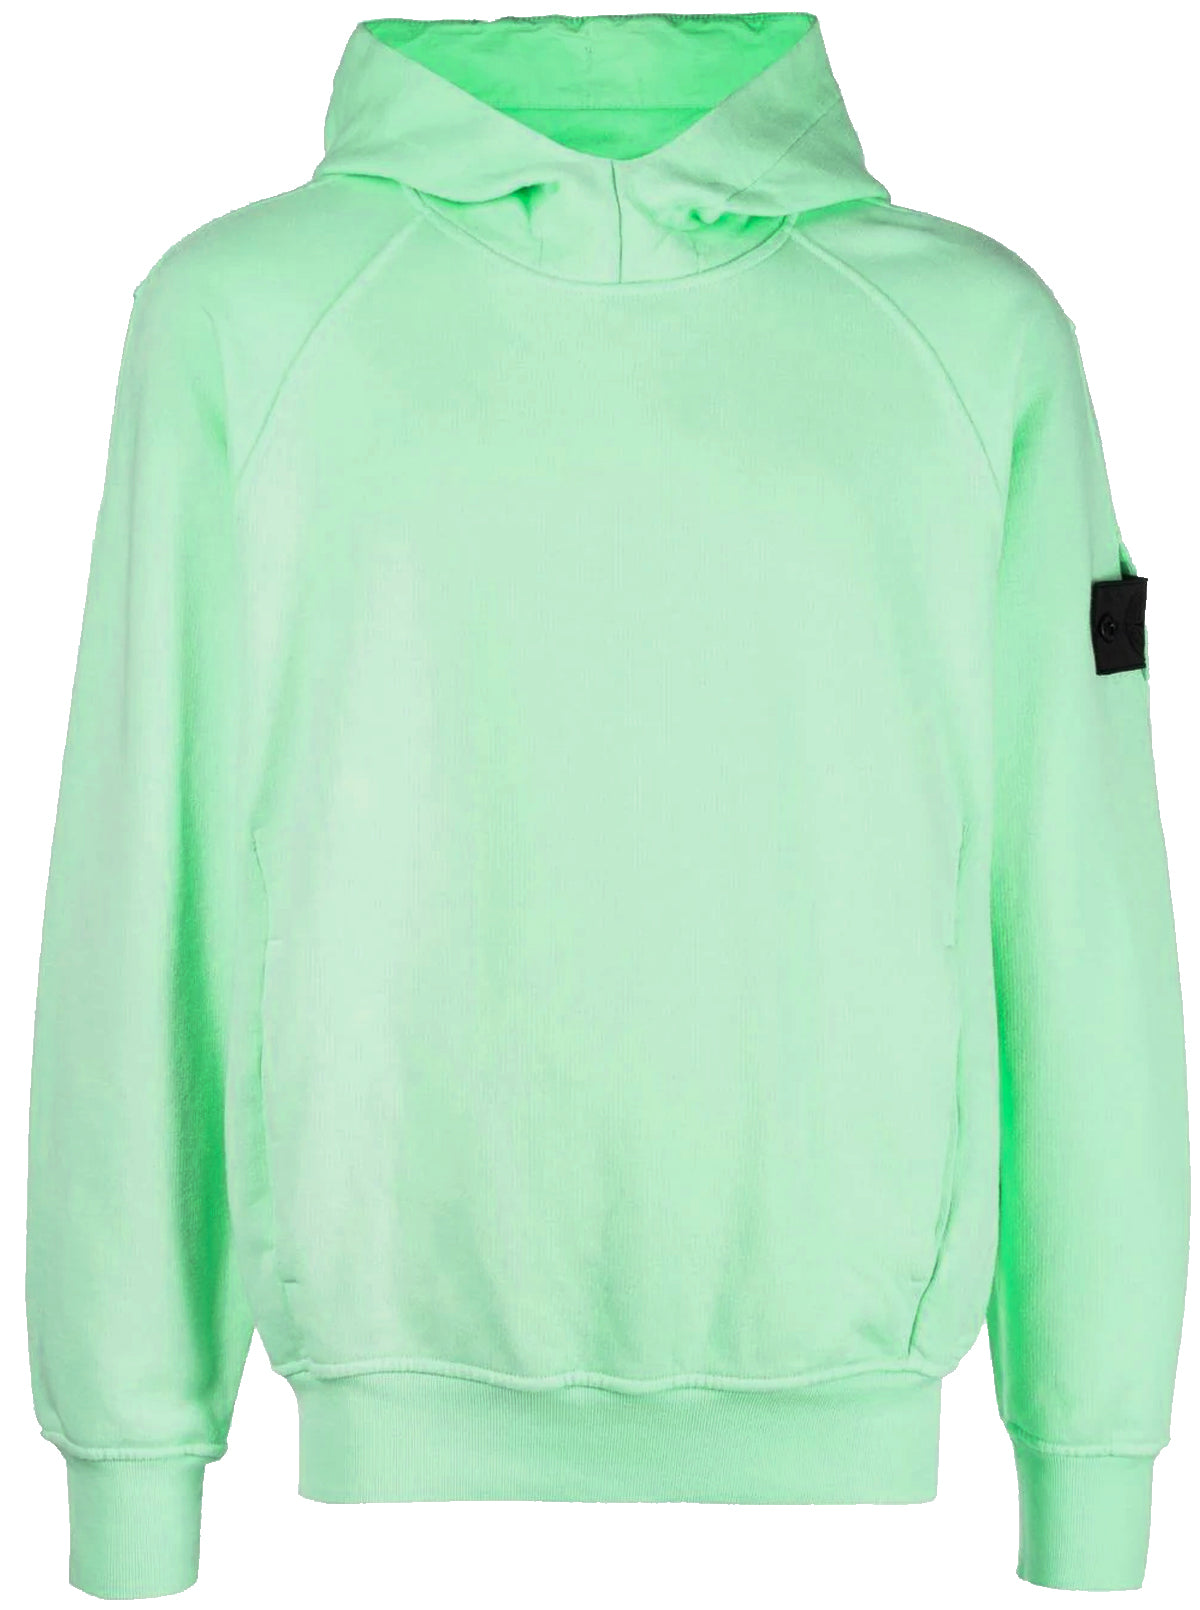 STONE ISLAND SHADOW PROJECT - Sweatshirt à capuche vert